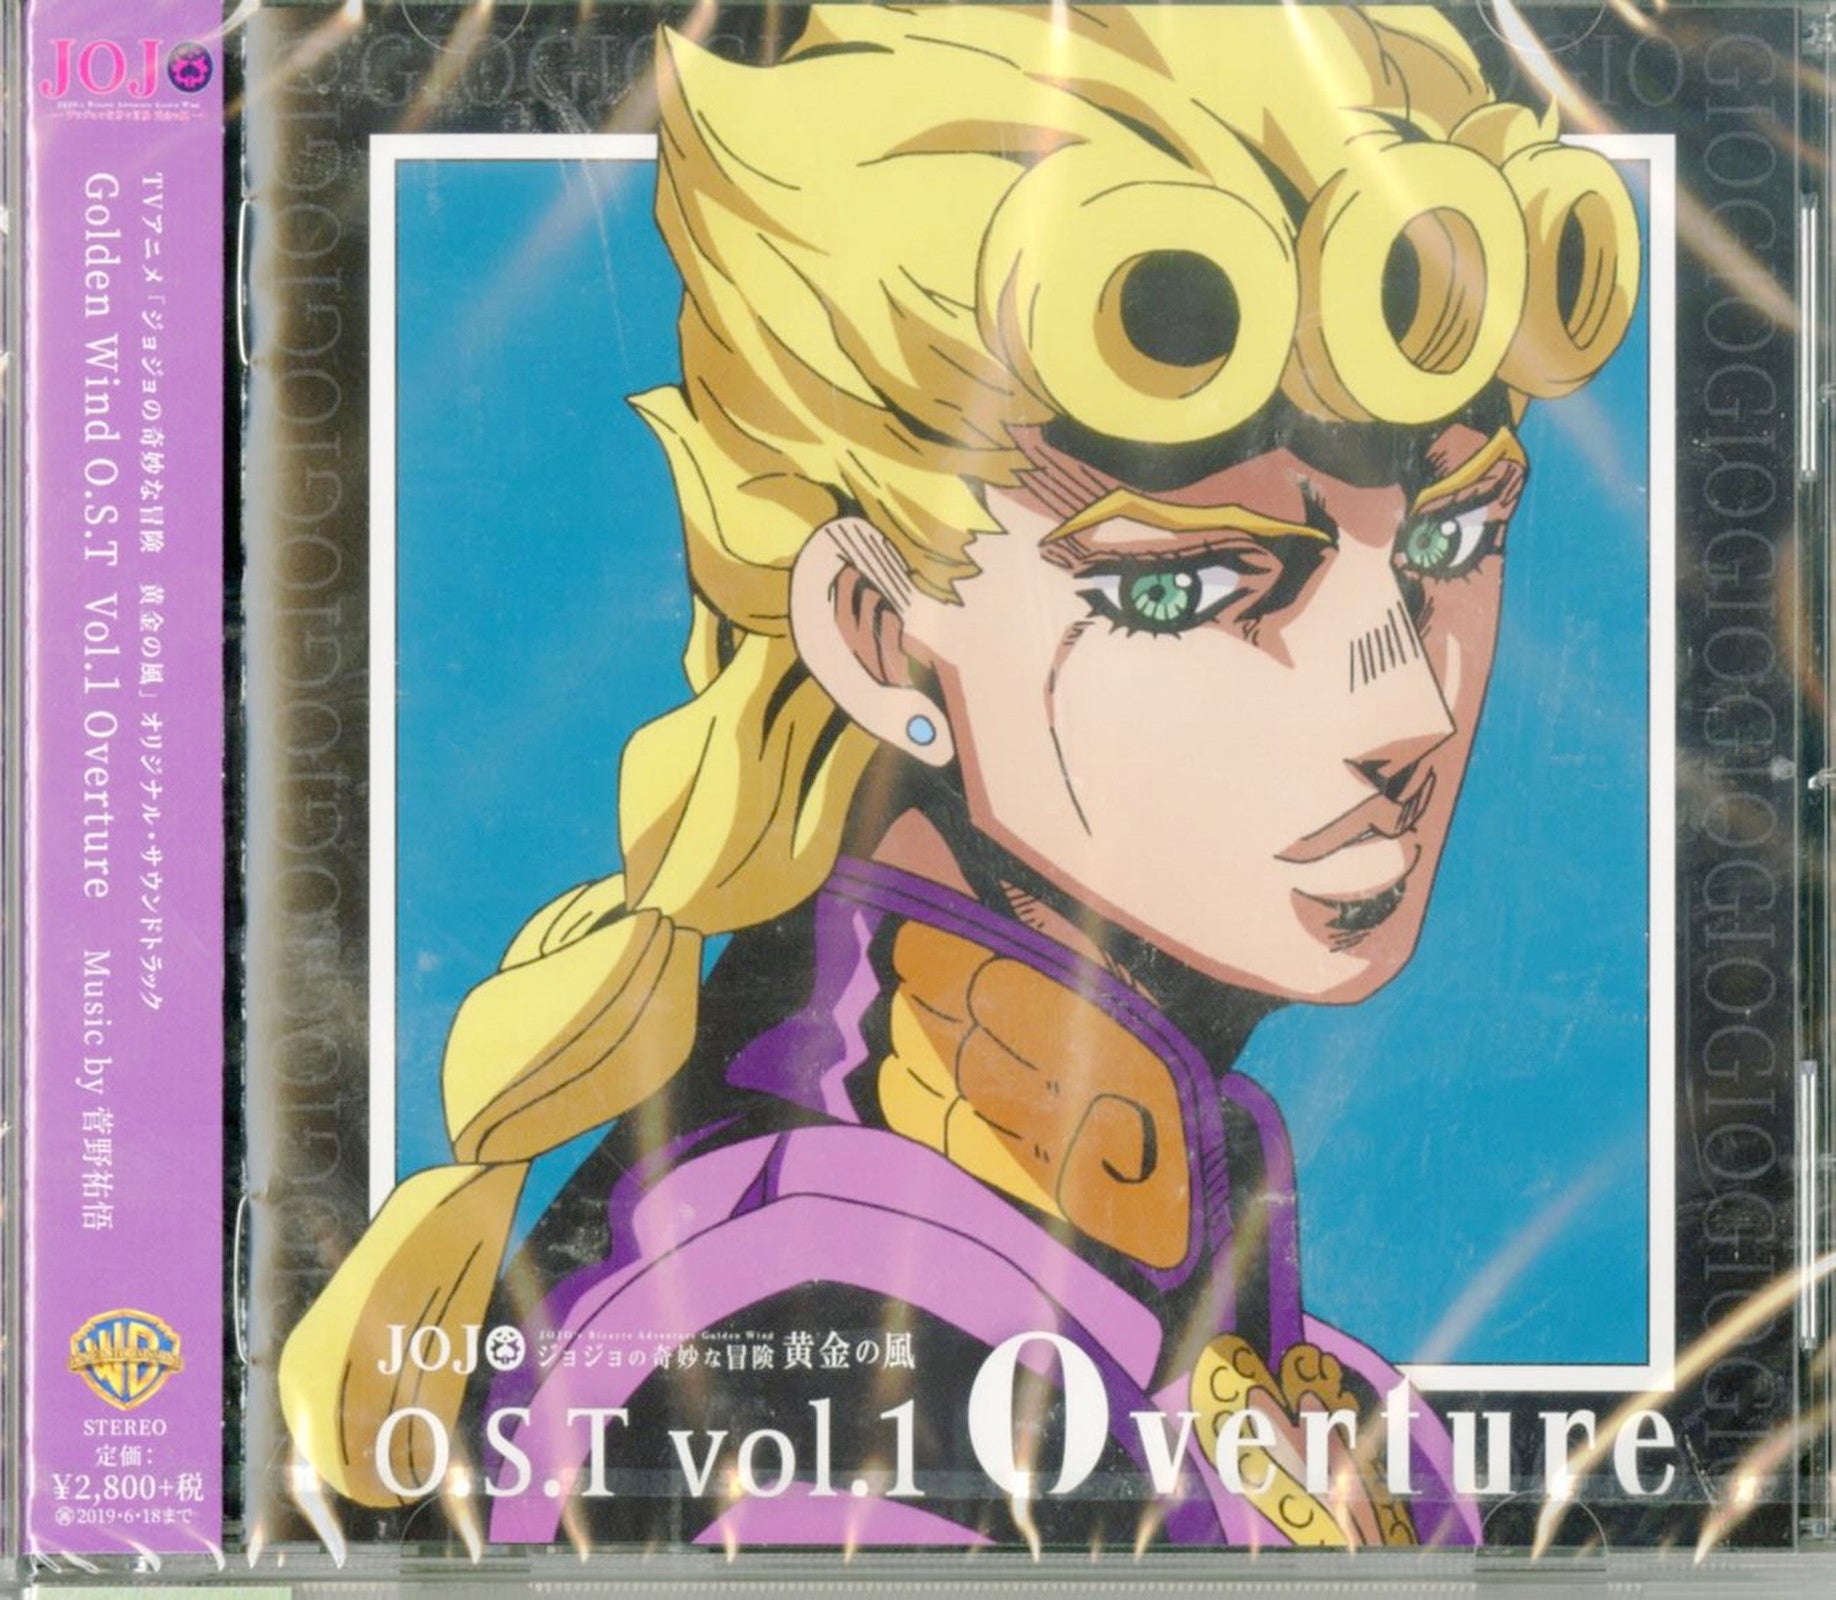 JoJo's Bizarre Adventure Golden Wind OST (Full) / Overture 